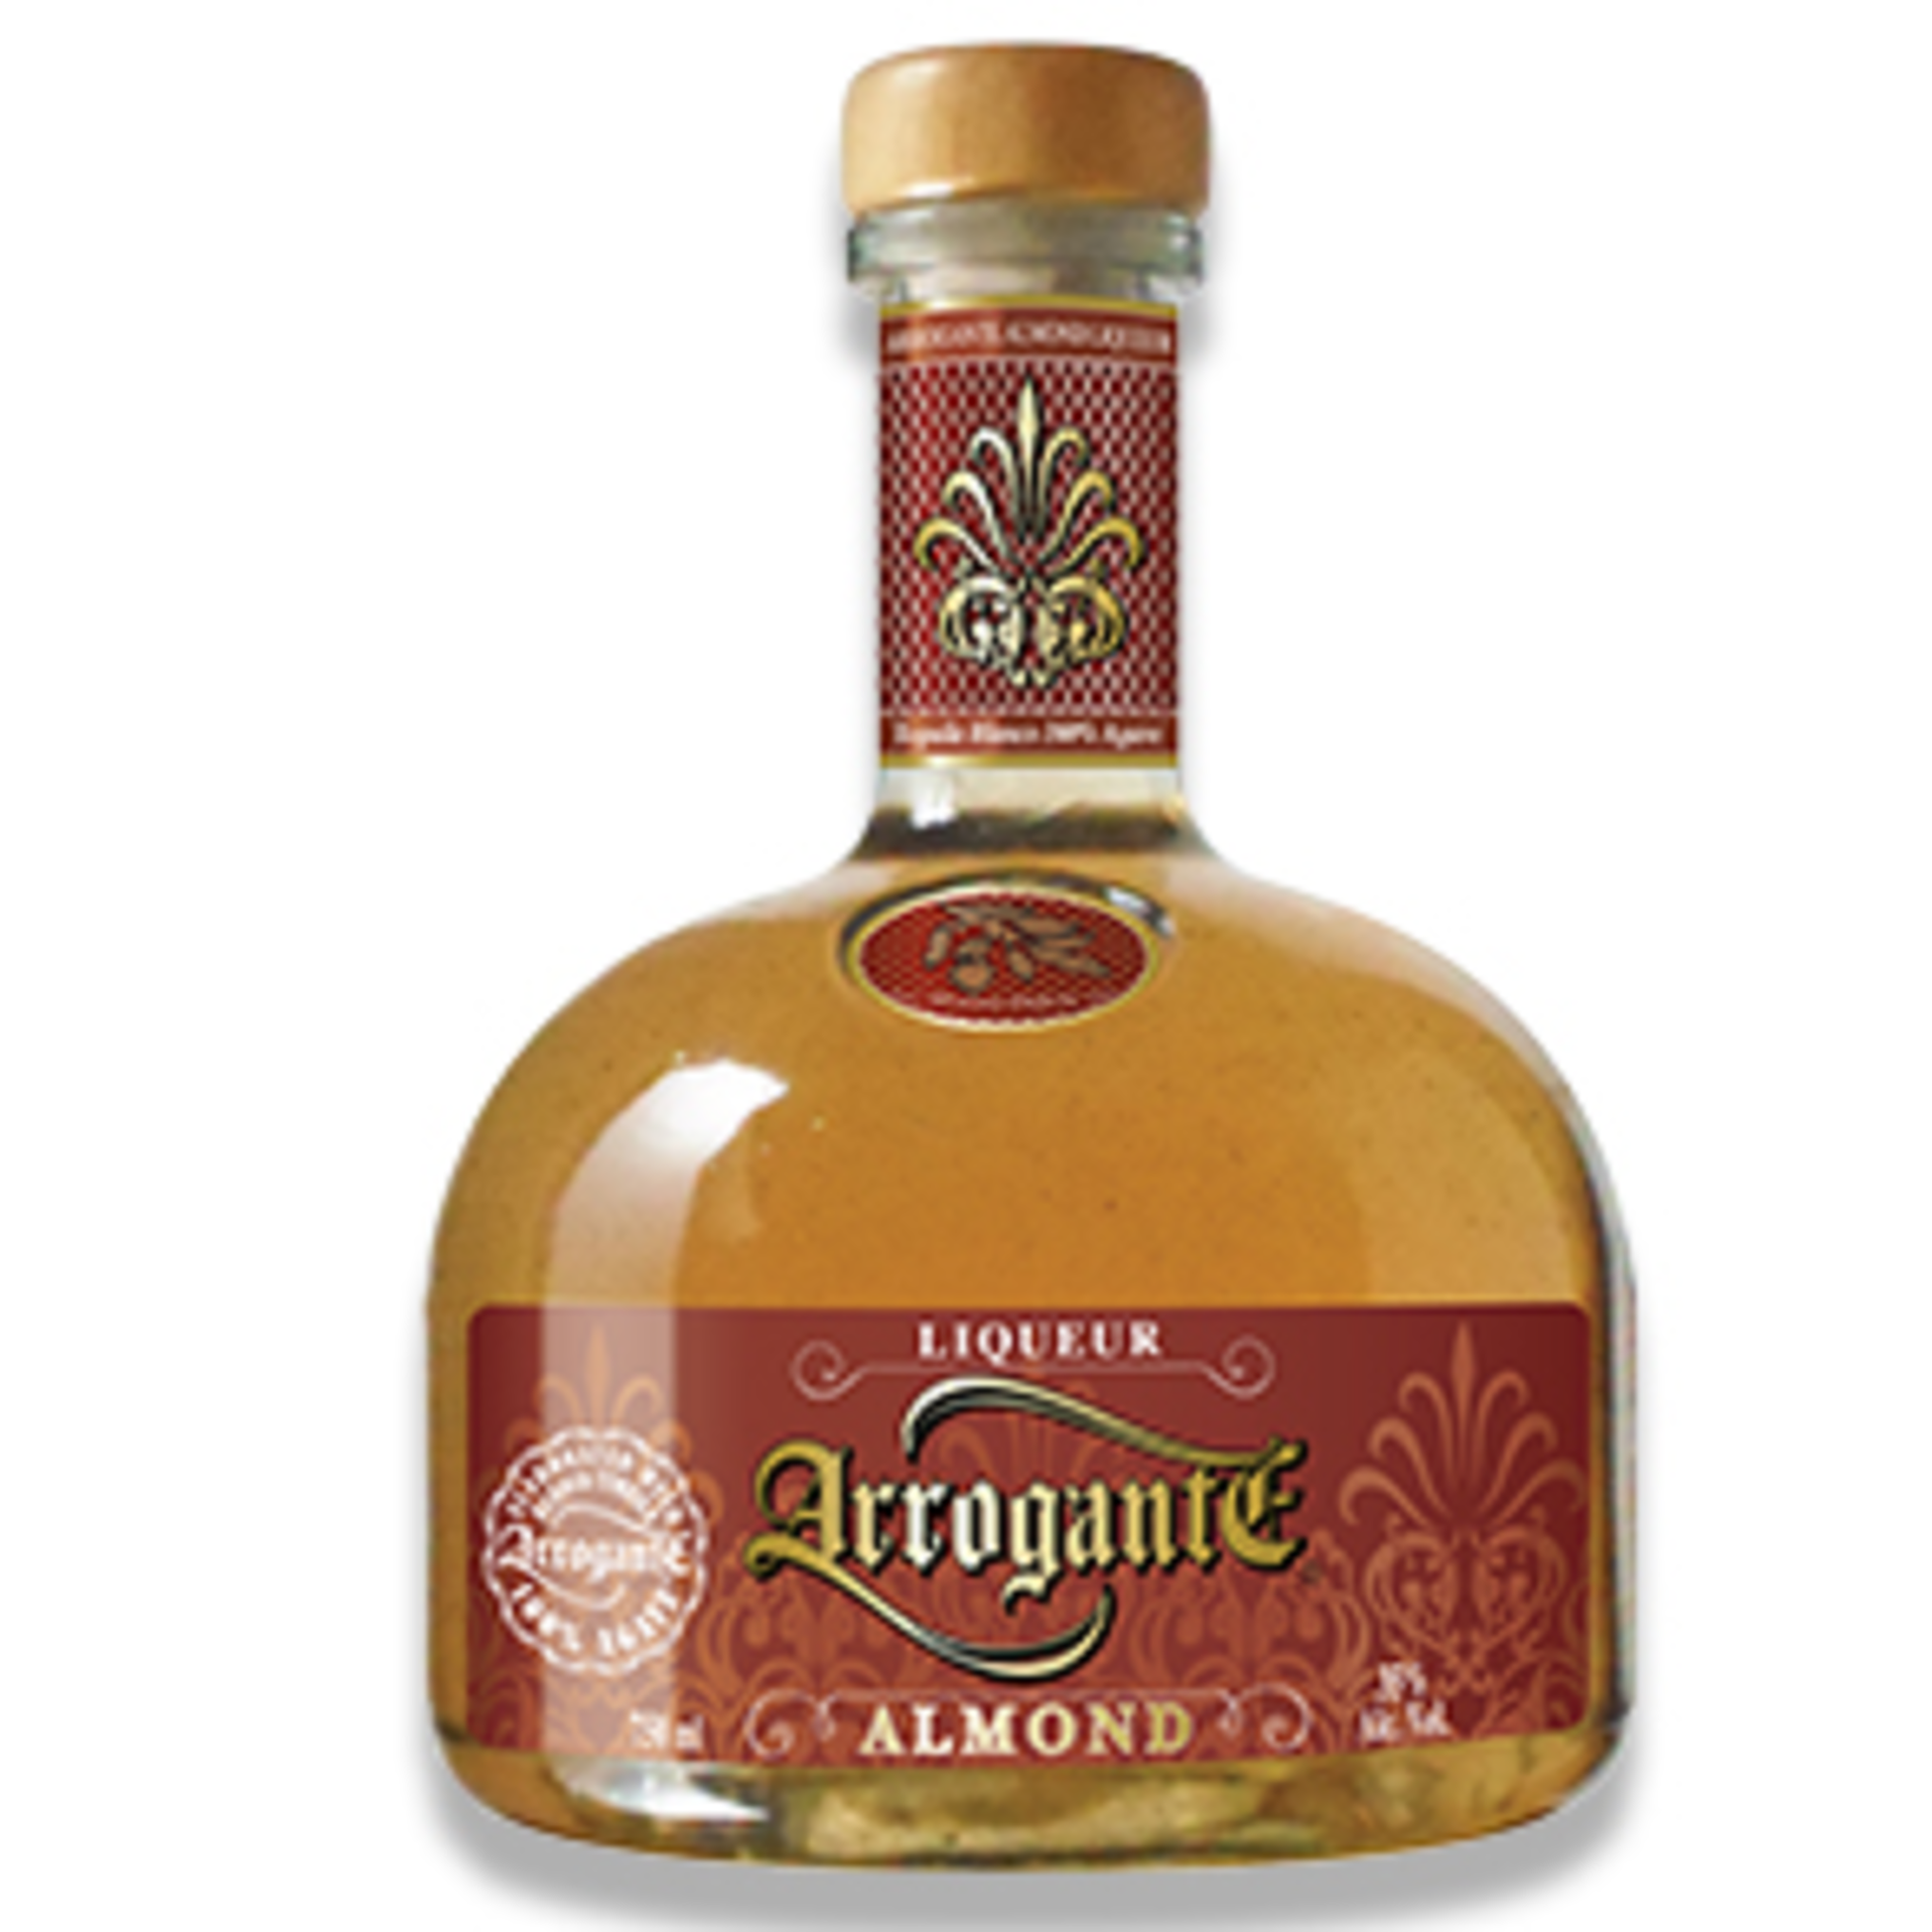 Arrogante Almond Tequila - Liquor Geeks